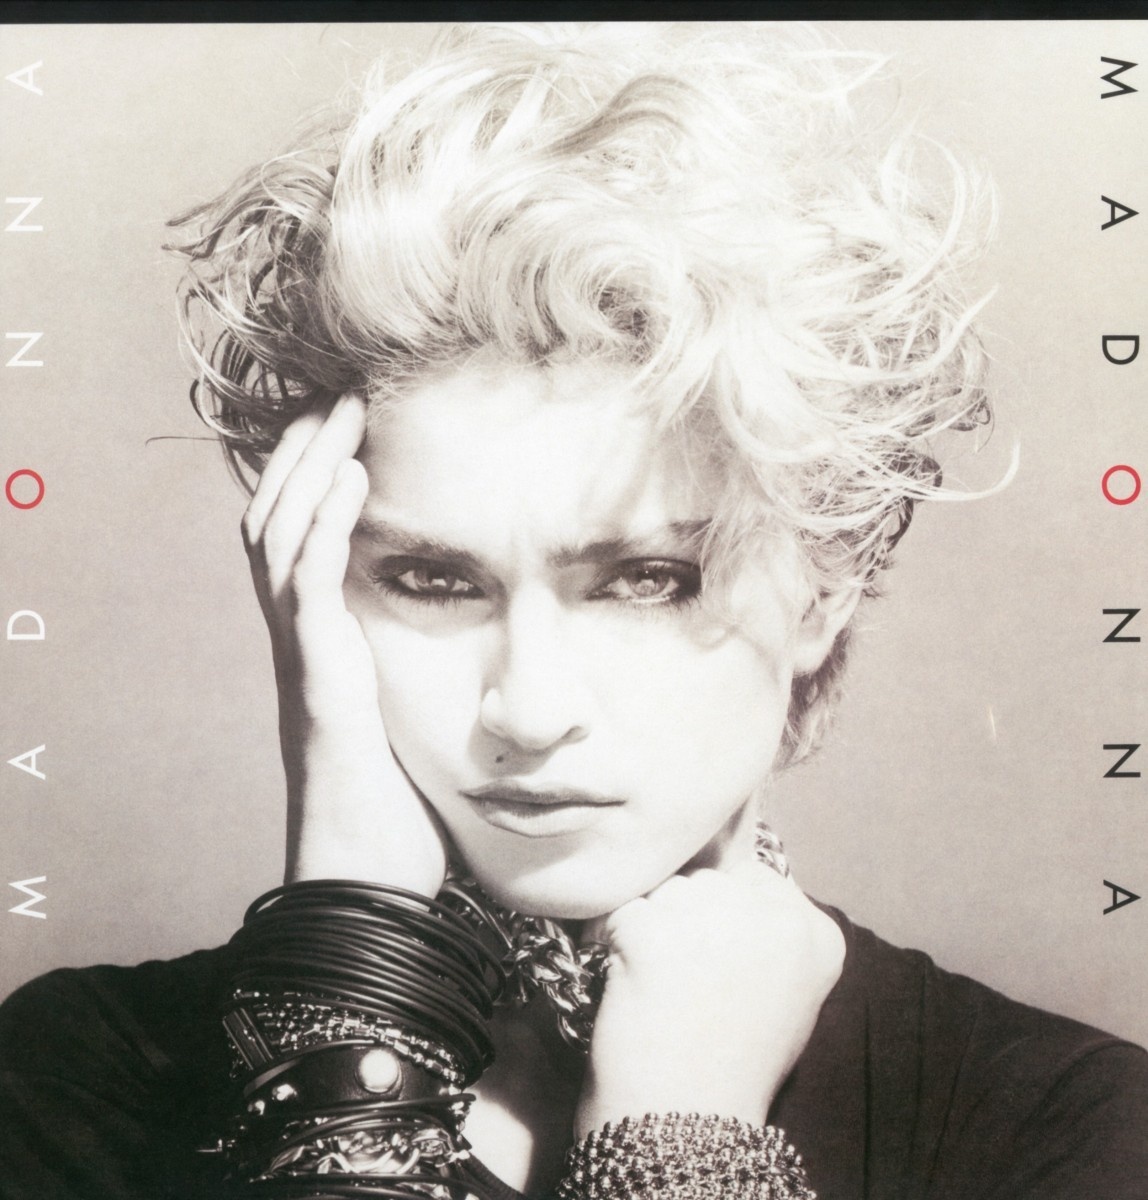 Madonna (Vinyl) - Madonna. (LP)